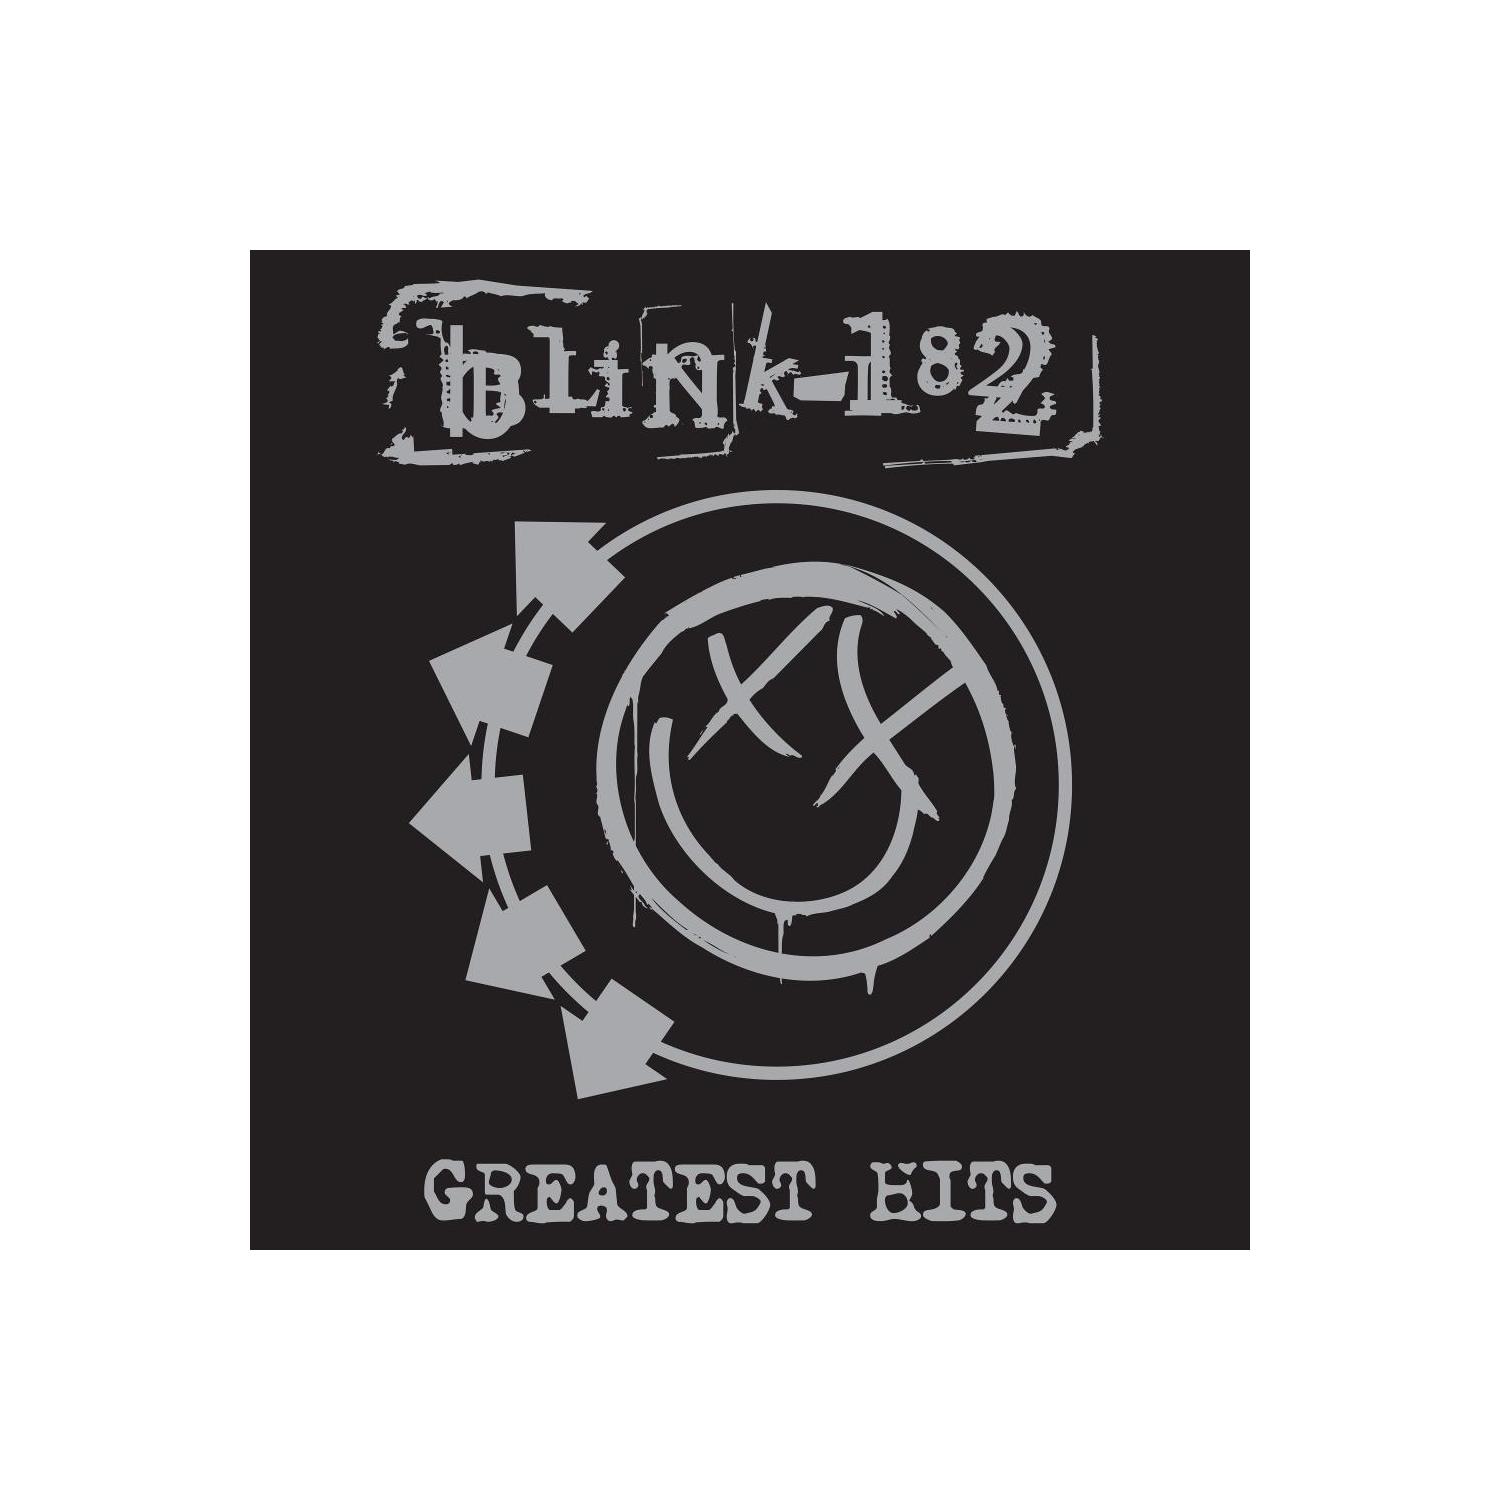 GREATEST HITS(2LP) -- BLINK-182